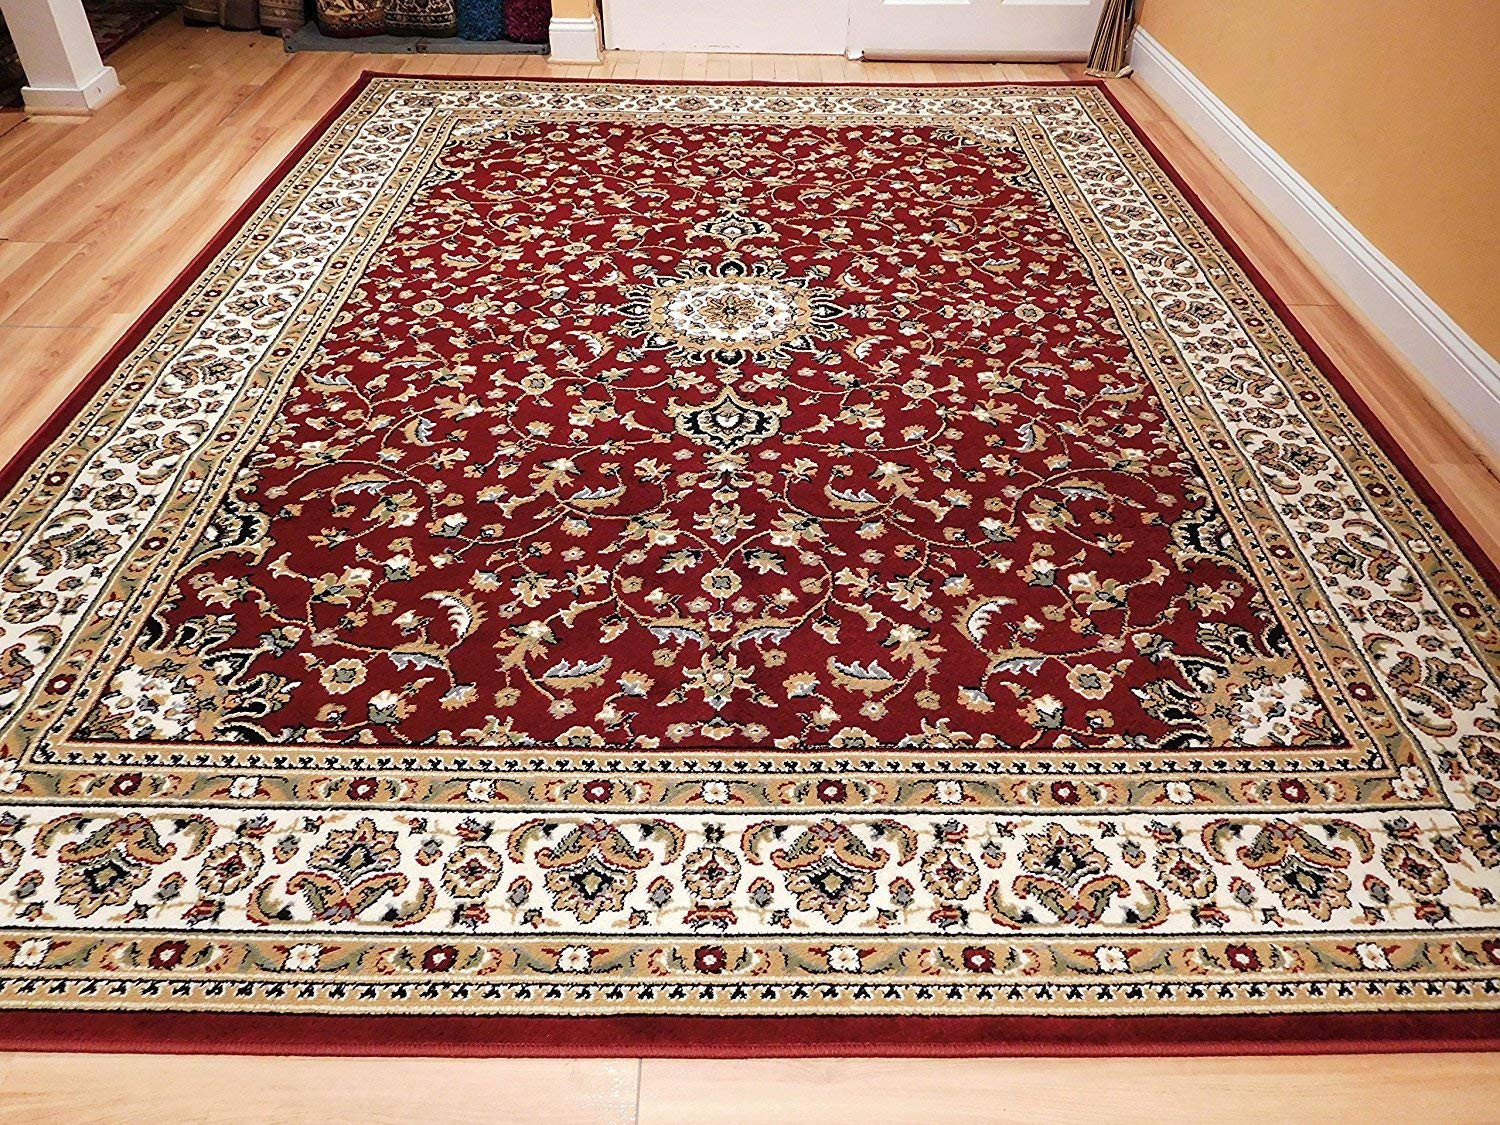 persian rugs amazon.com: large 5x8 red cream beige black isfahan area rug oriental WHNUHMR